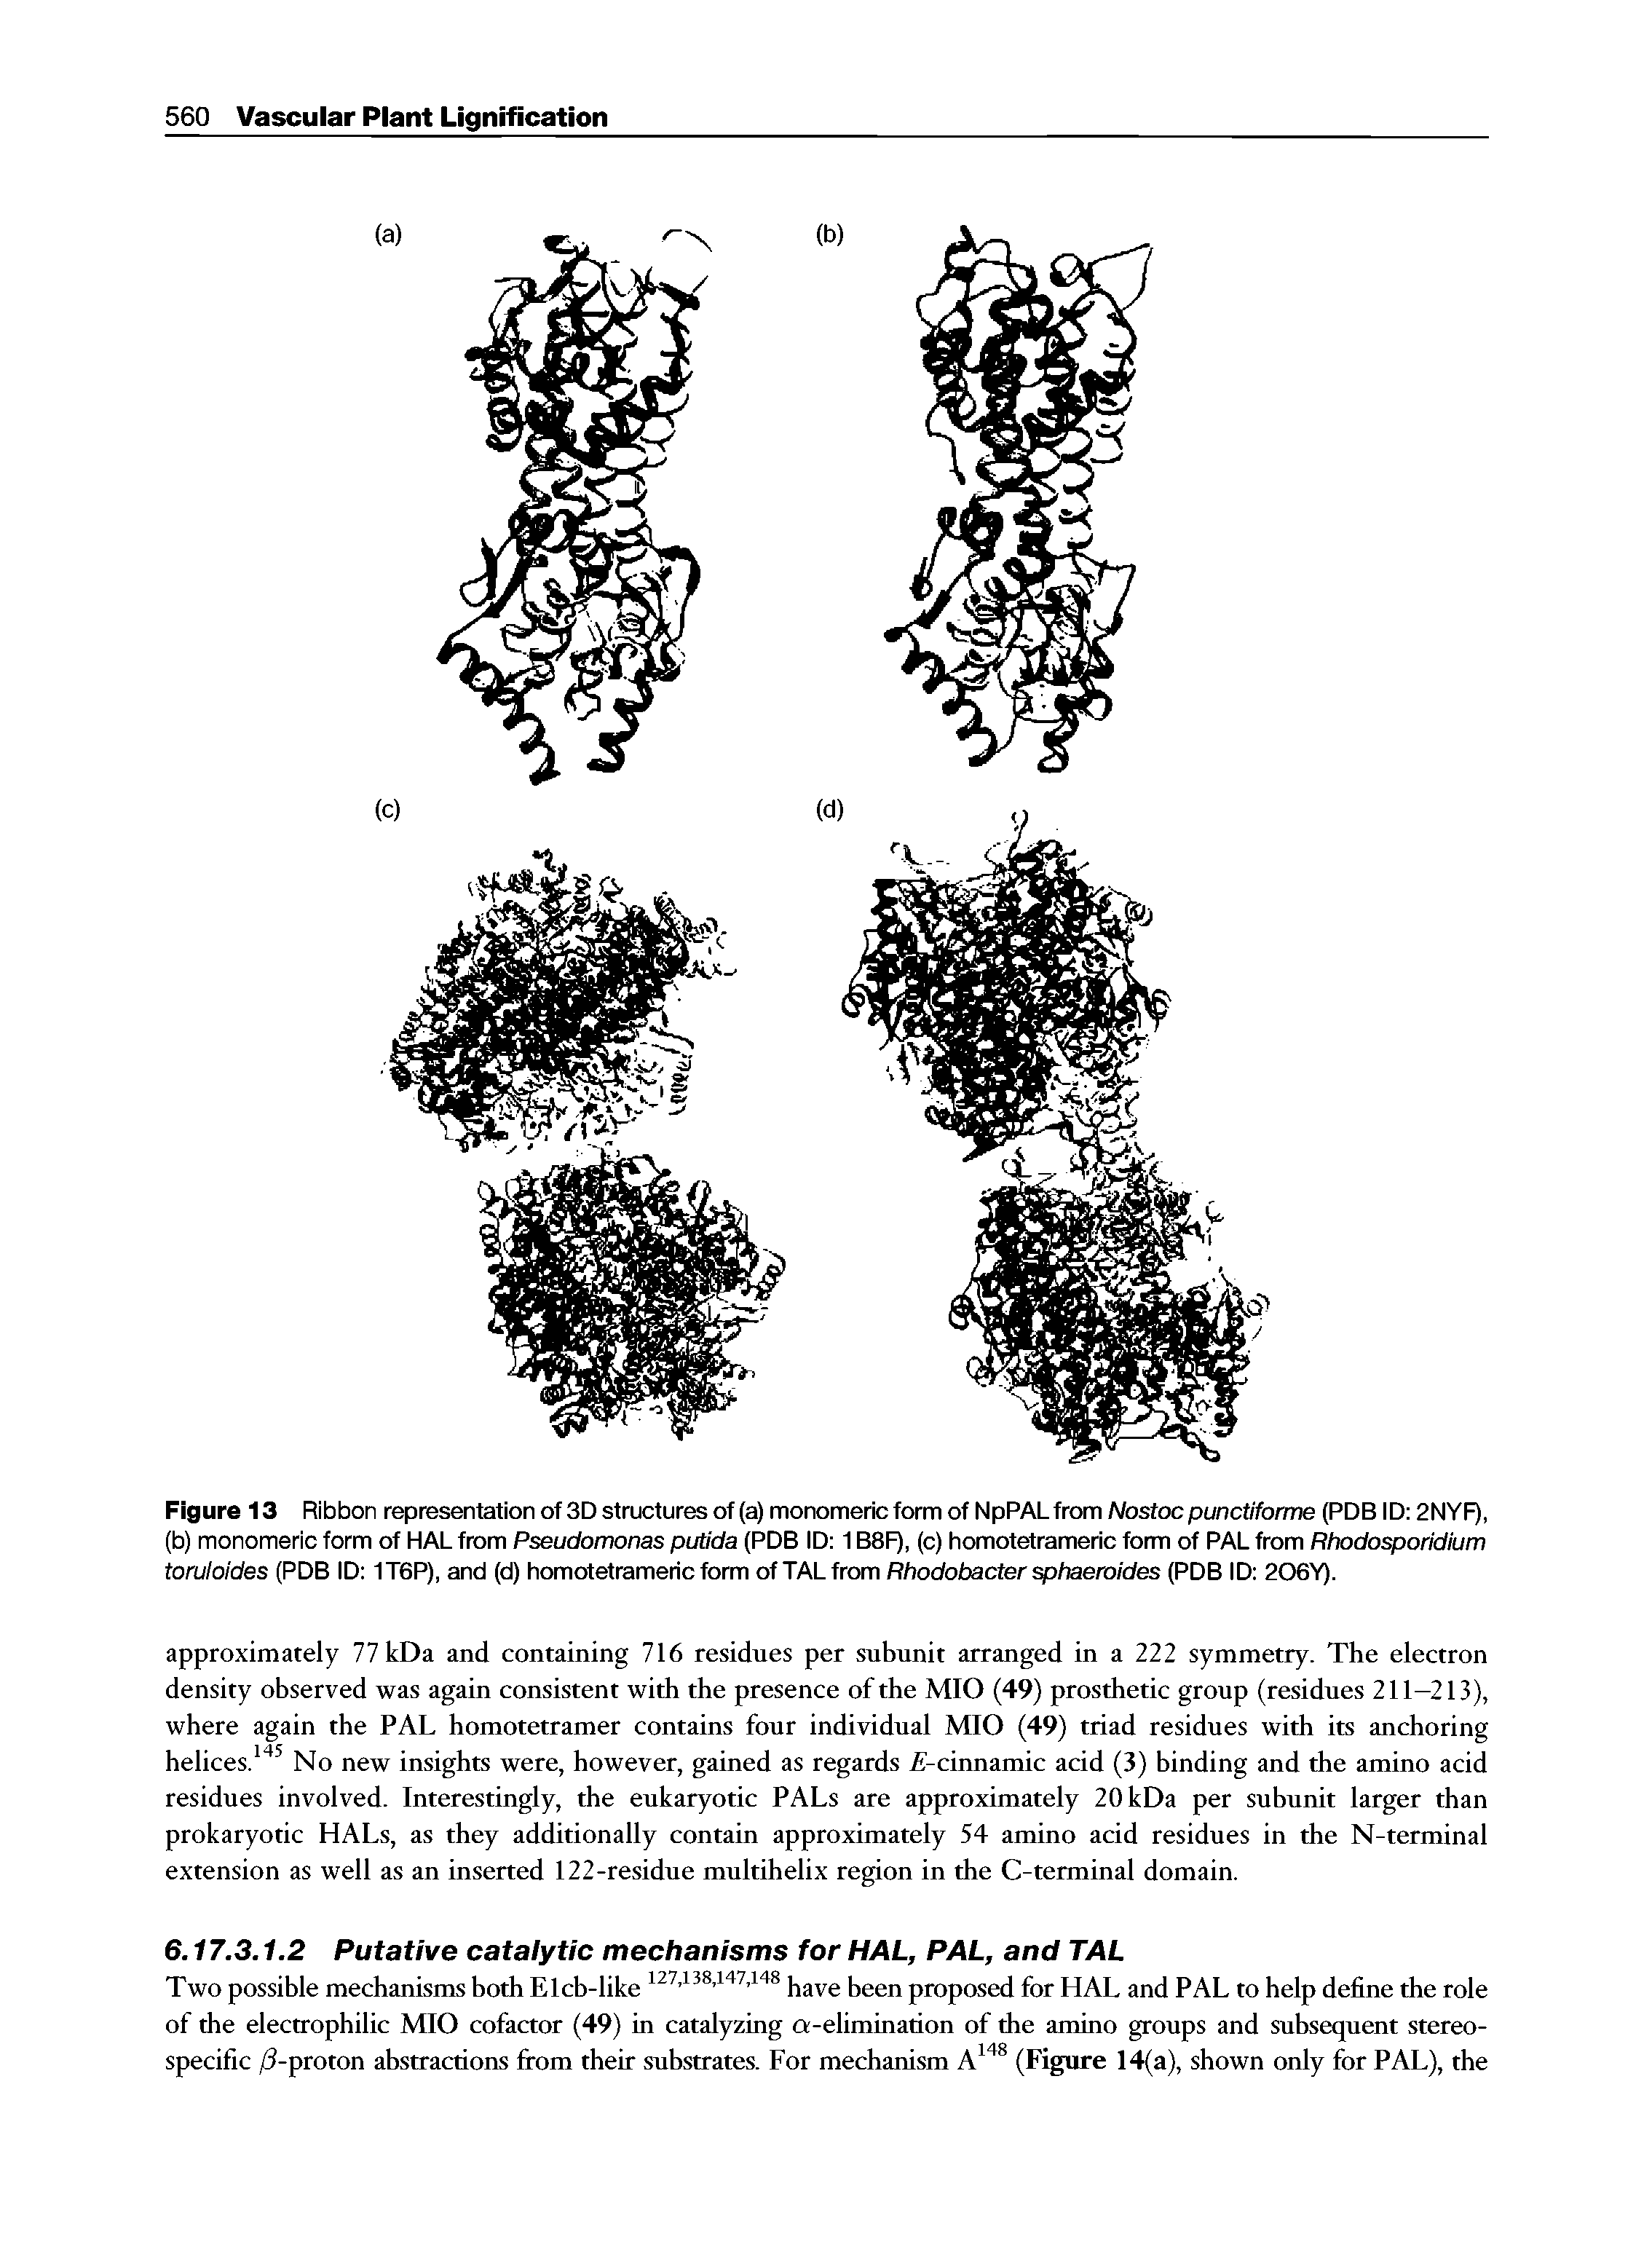 Figure 13 Ribbon representation of 3D structures of (a) monomericform of NpPAL from Nostocpuncf/fomie (PDB ID 2NYF), (b) monomeric form of HAL from Pseudomonas putida (PDB ID 1B8F), (c) homotetrameric form of PAL from Rhodosporidium toruloides (PDB ID 1T6P), and (d) homotetrameric form of TALfrom Rhodobacter sphaeroides (PDB ID 206Y).